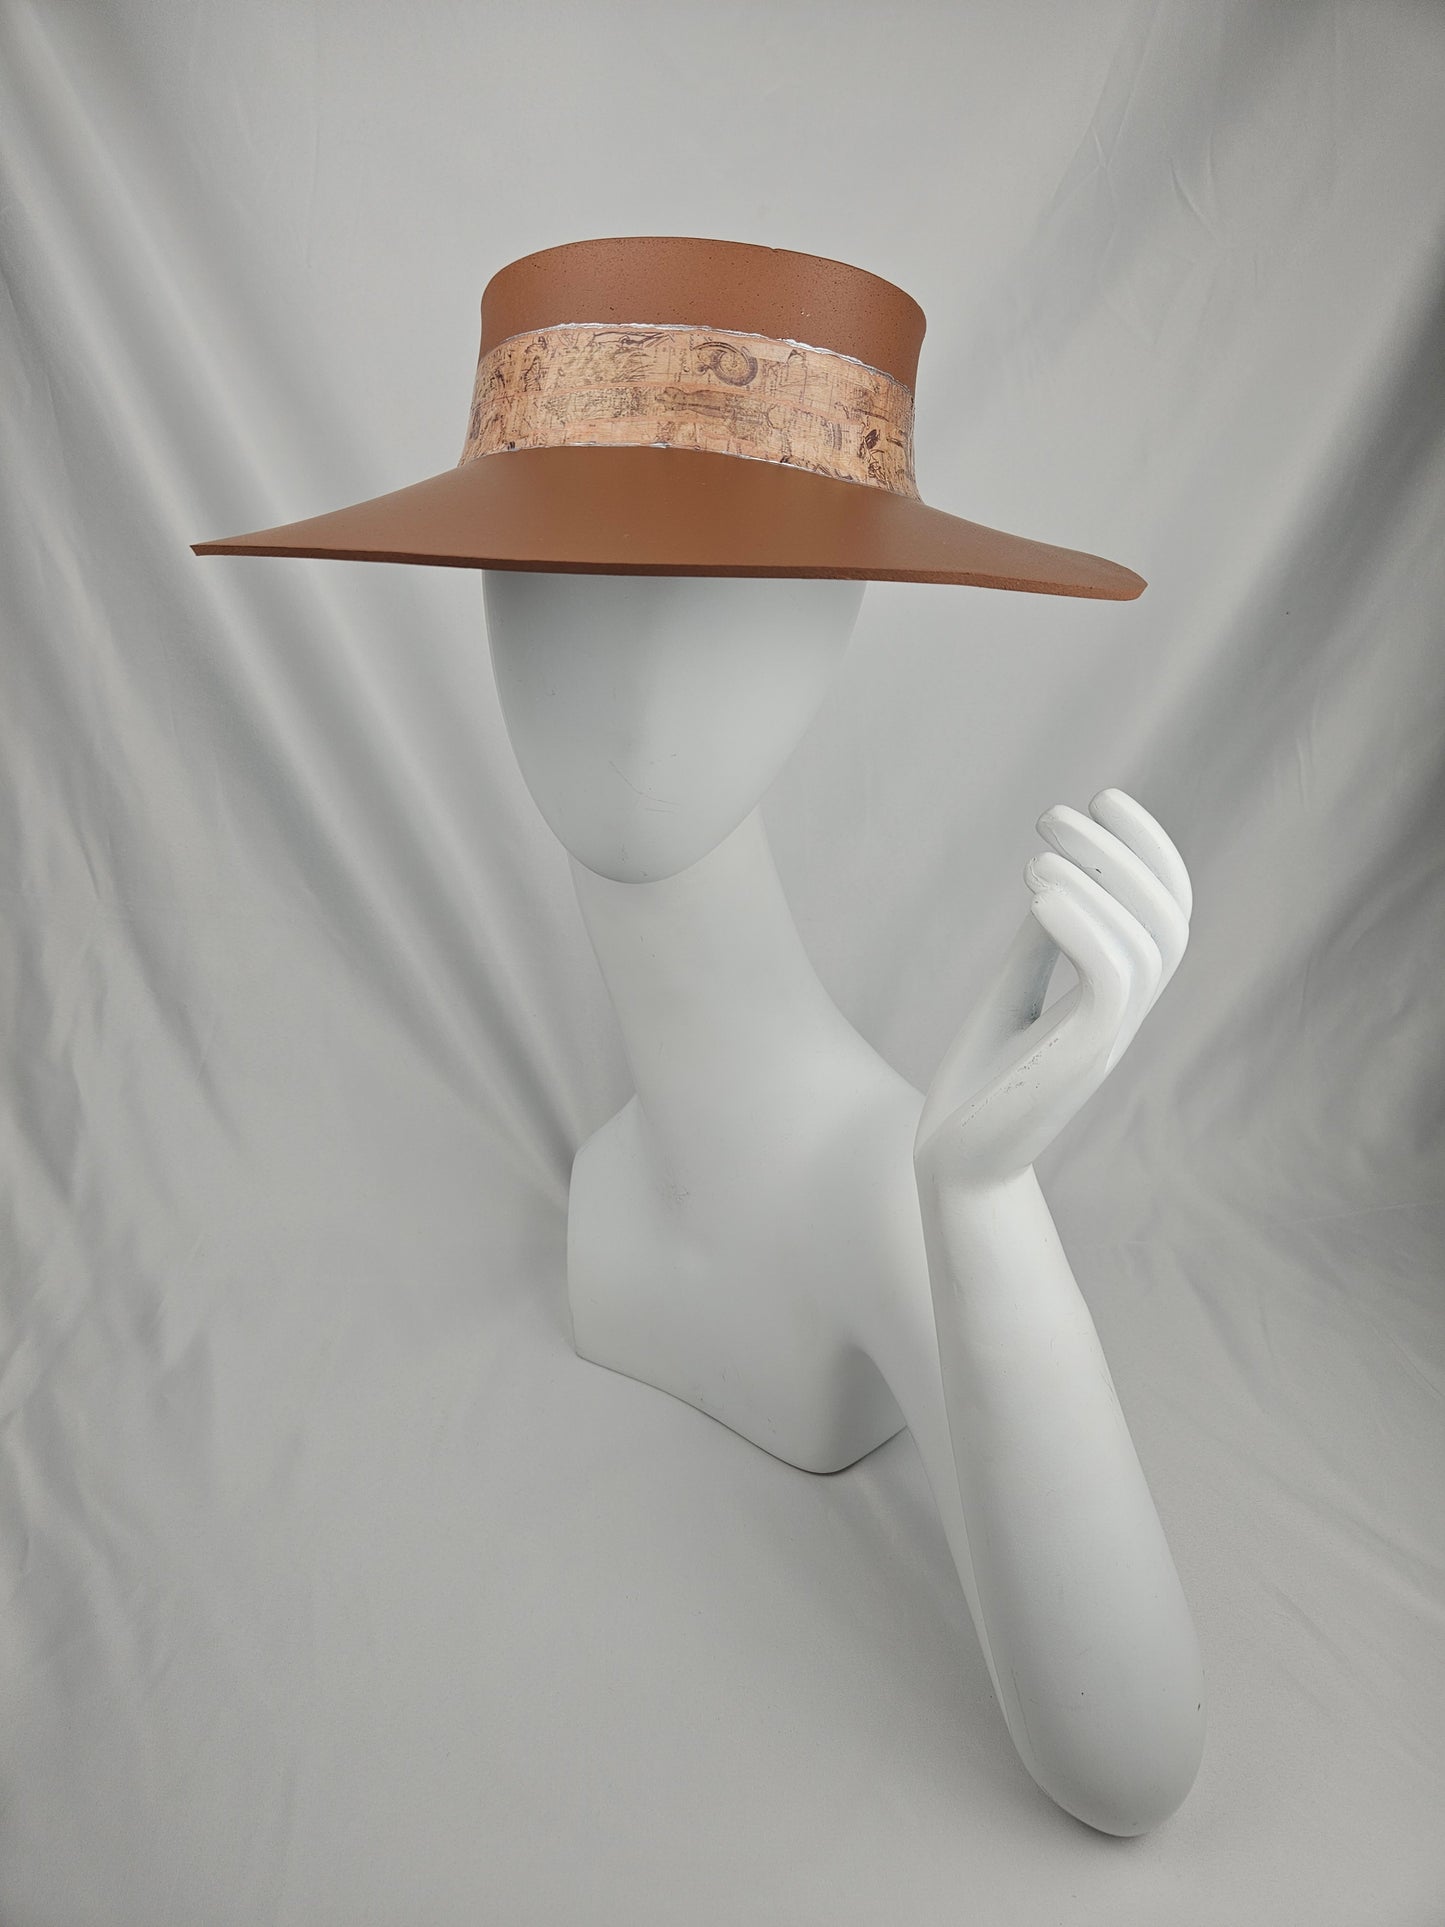 Caramel Brown Audrey Sun Visor Hat with Warm Brown Vintage Style Band: 1950s, Walks, Brunch, Tea, Golf, Wedding, Church, No Headache, Easter, Pool, Beach, Big Brim